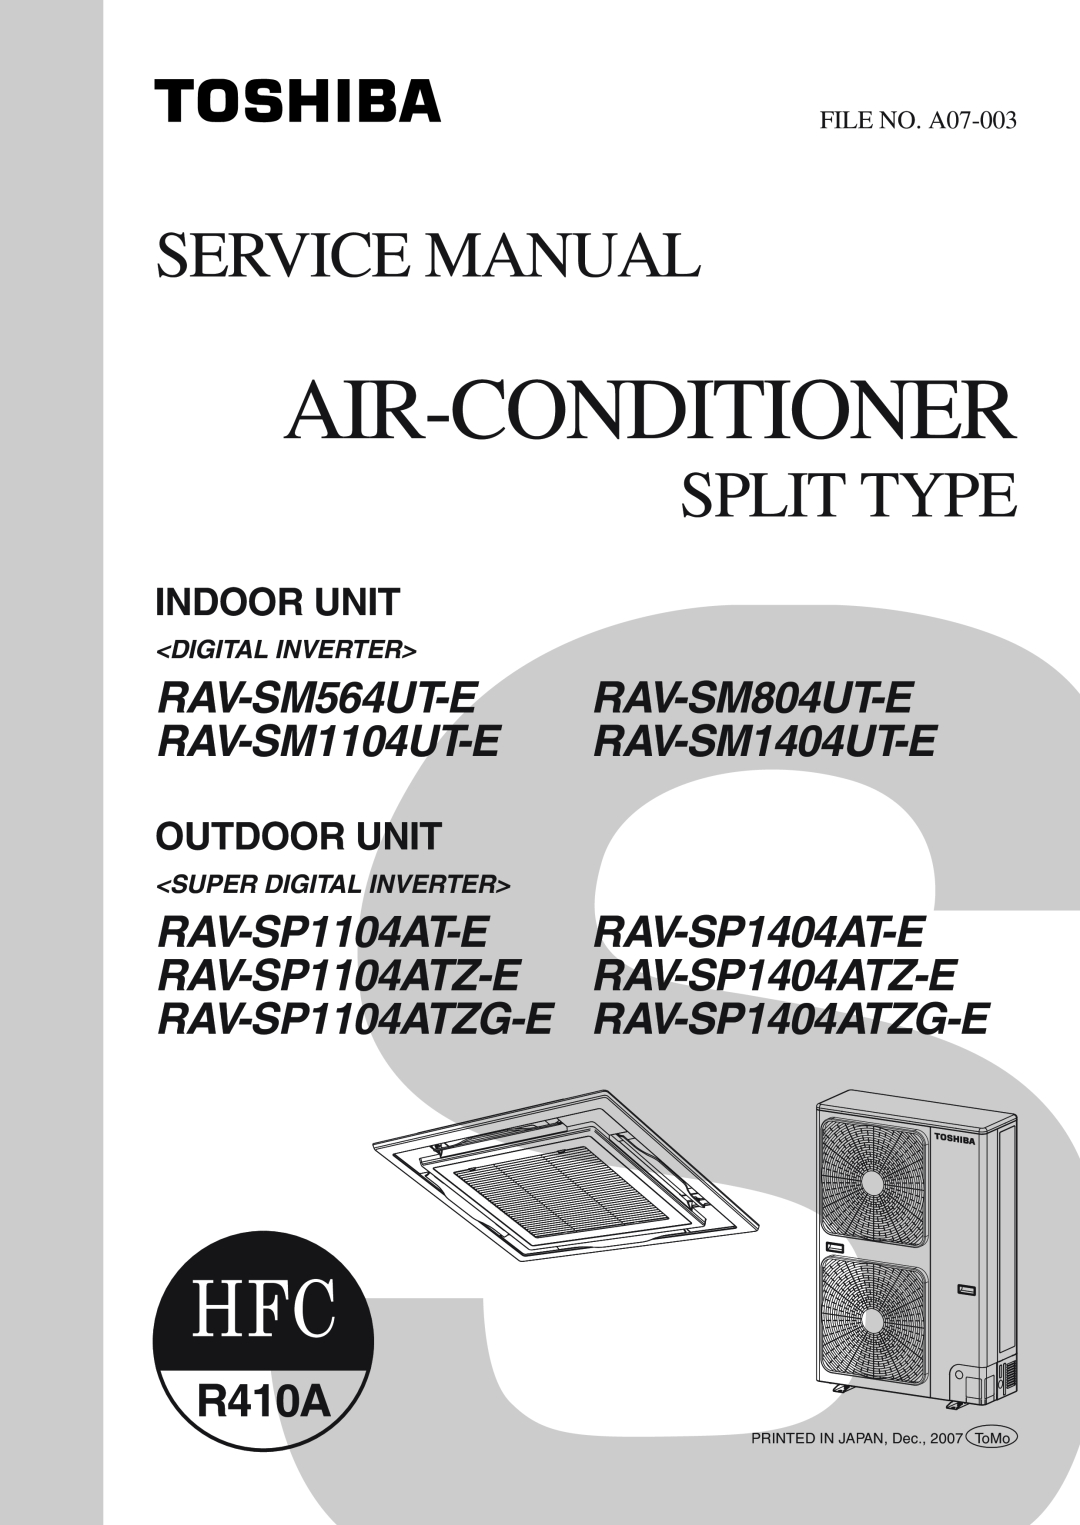 Toshiba RAV-SM1104UT-E service manual Indoor Unit, Outdoor Unit, <Super Digital Inverter>, Air-Conditioner, Split Type 